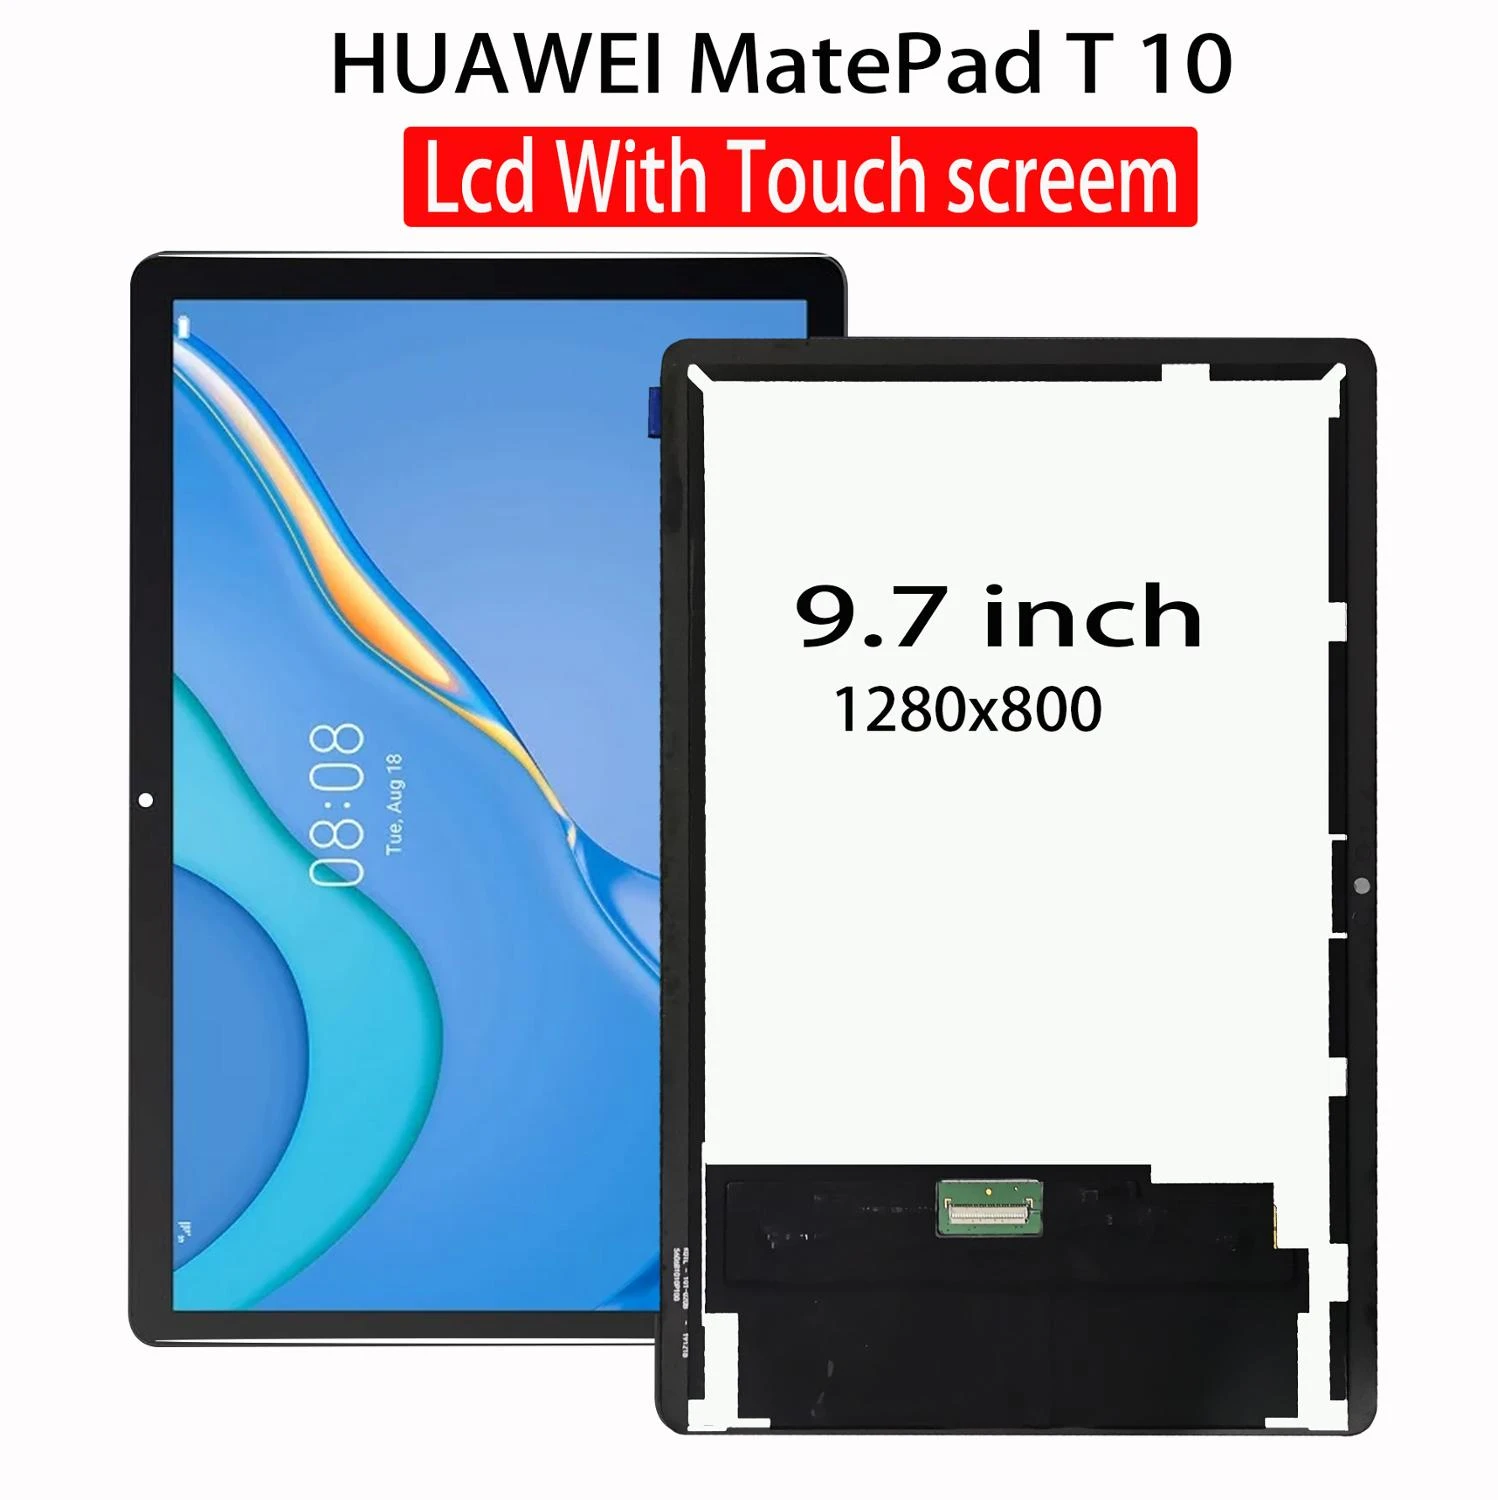 Huawei matepad t10